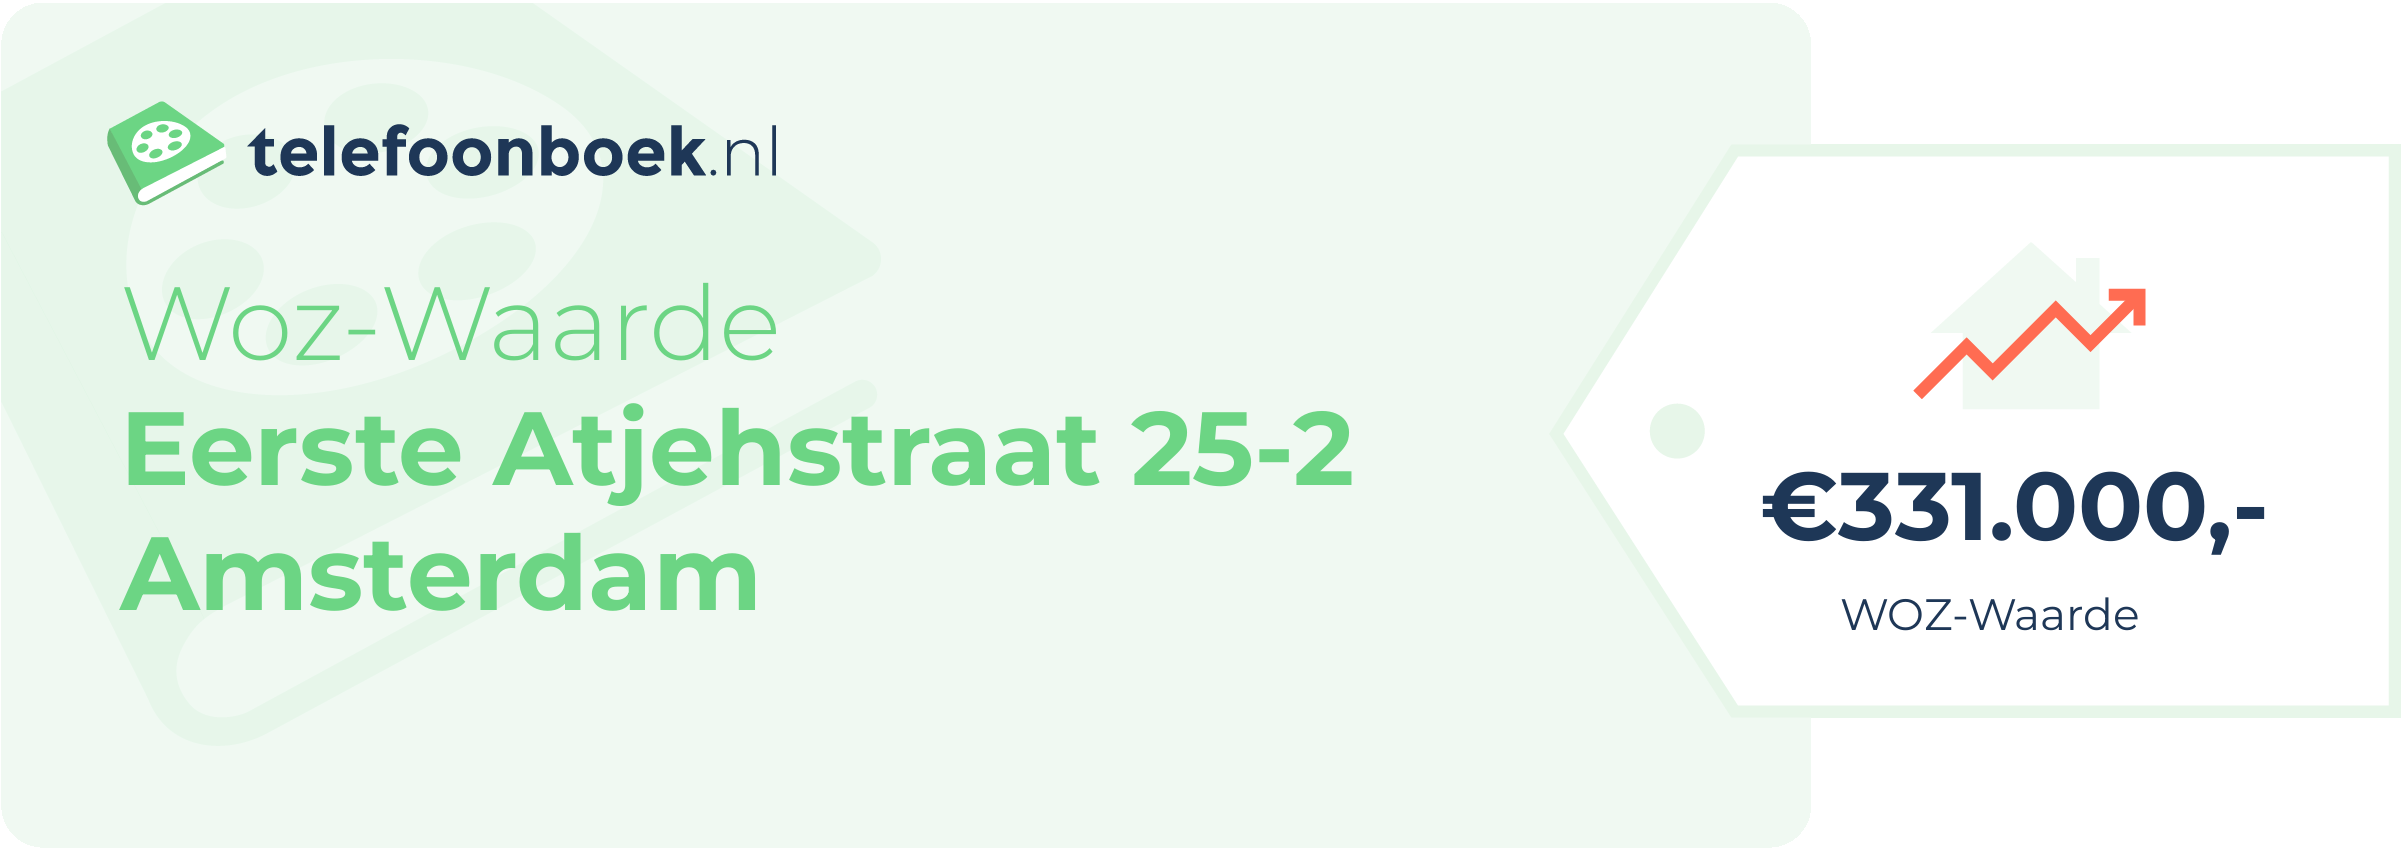 WOZ-waarde Eerste Atjehstraat 25-2 Amsterdam